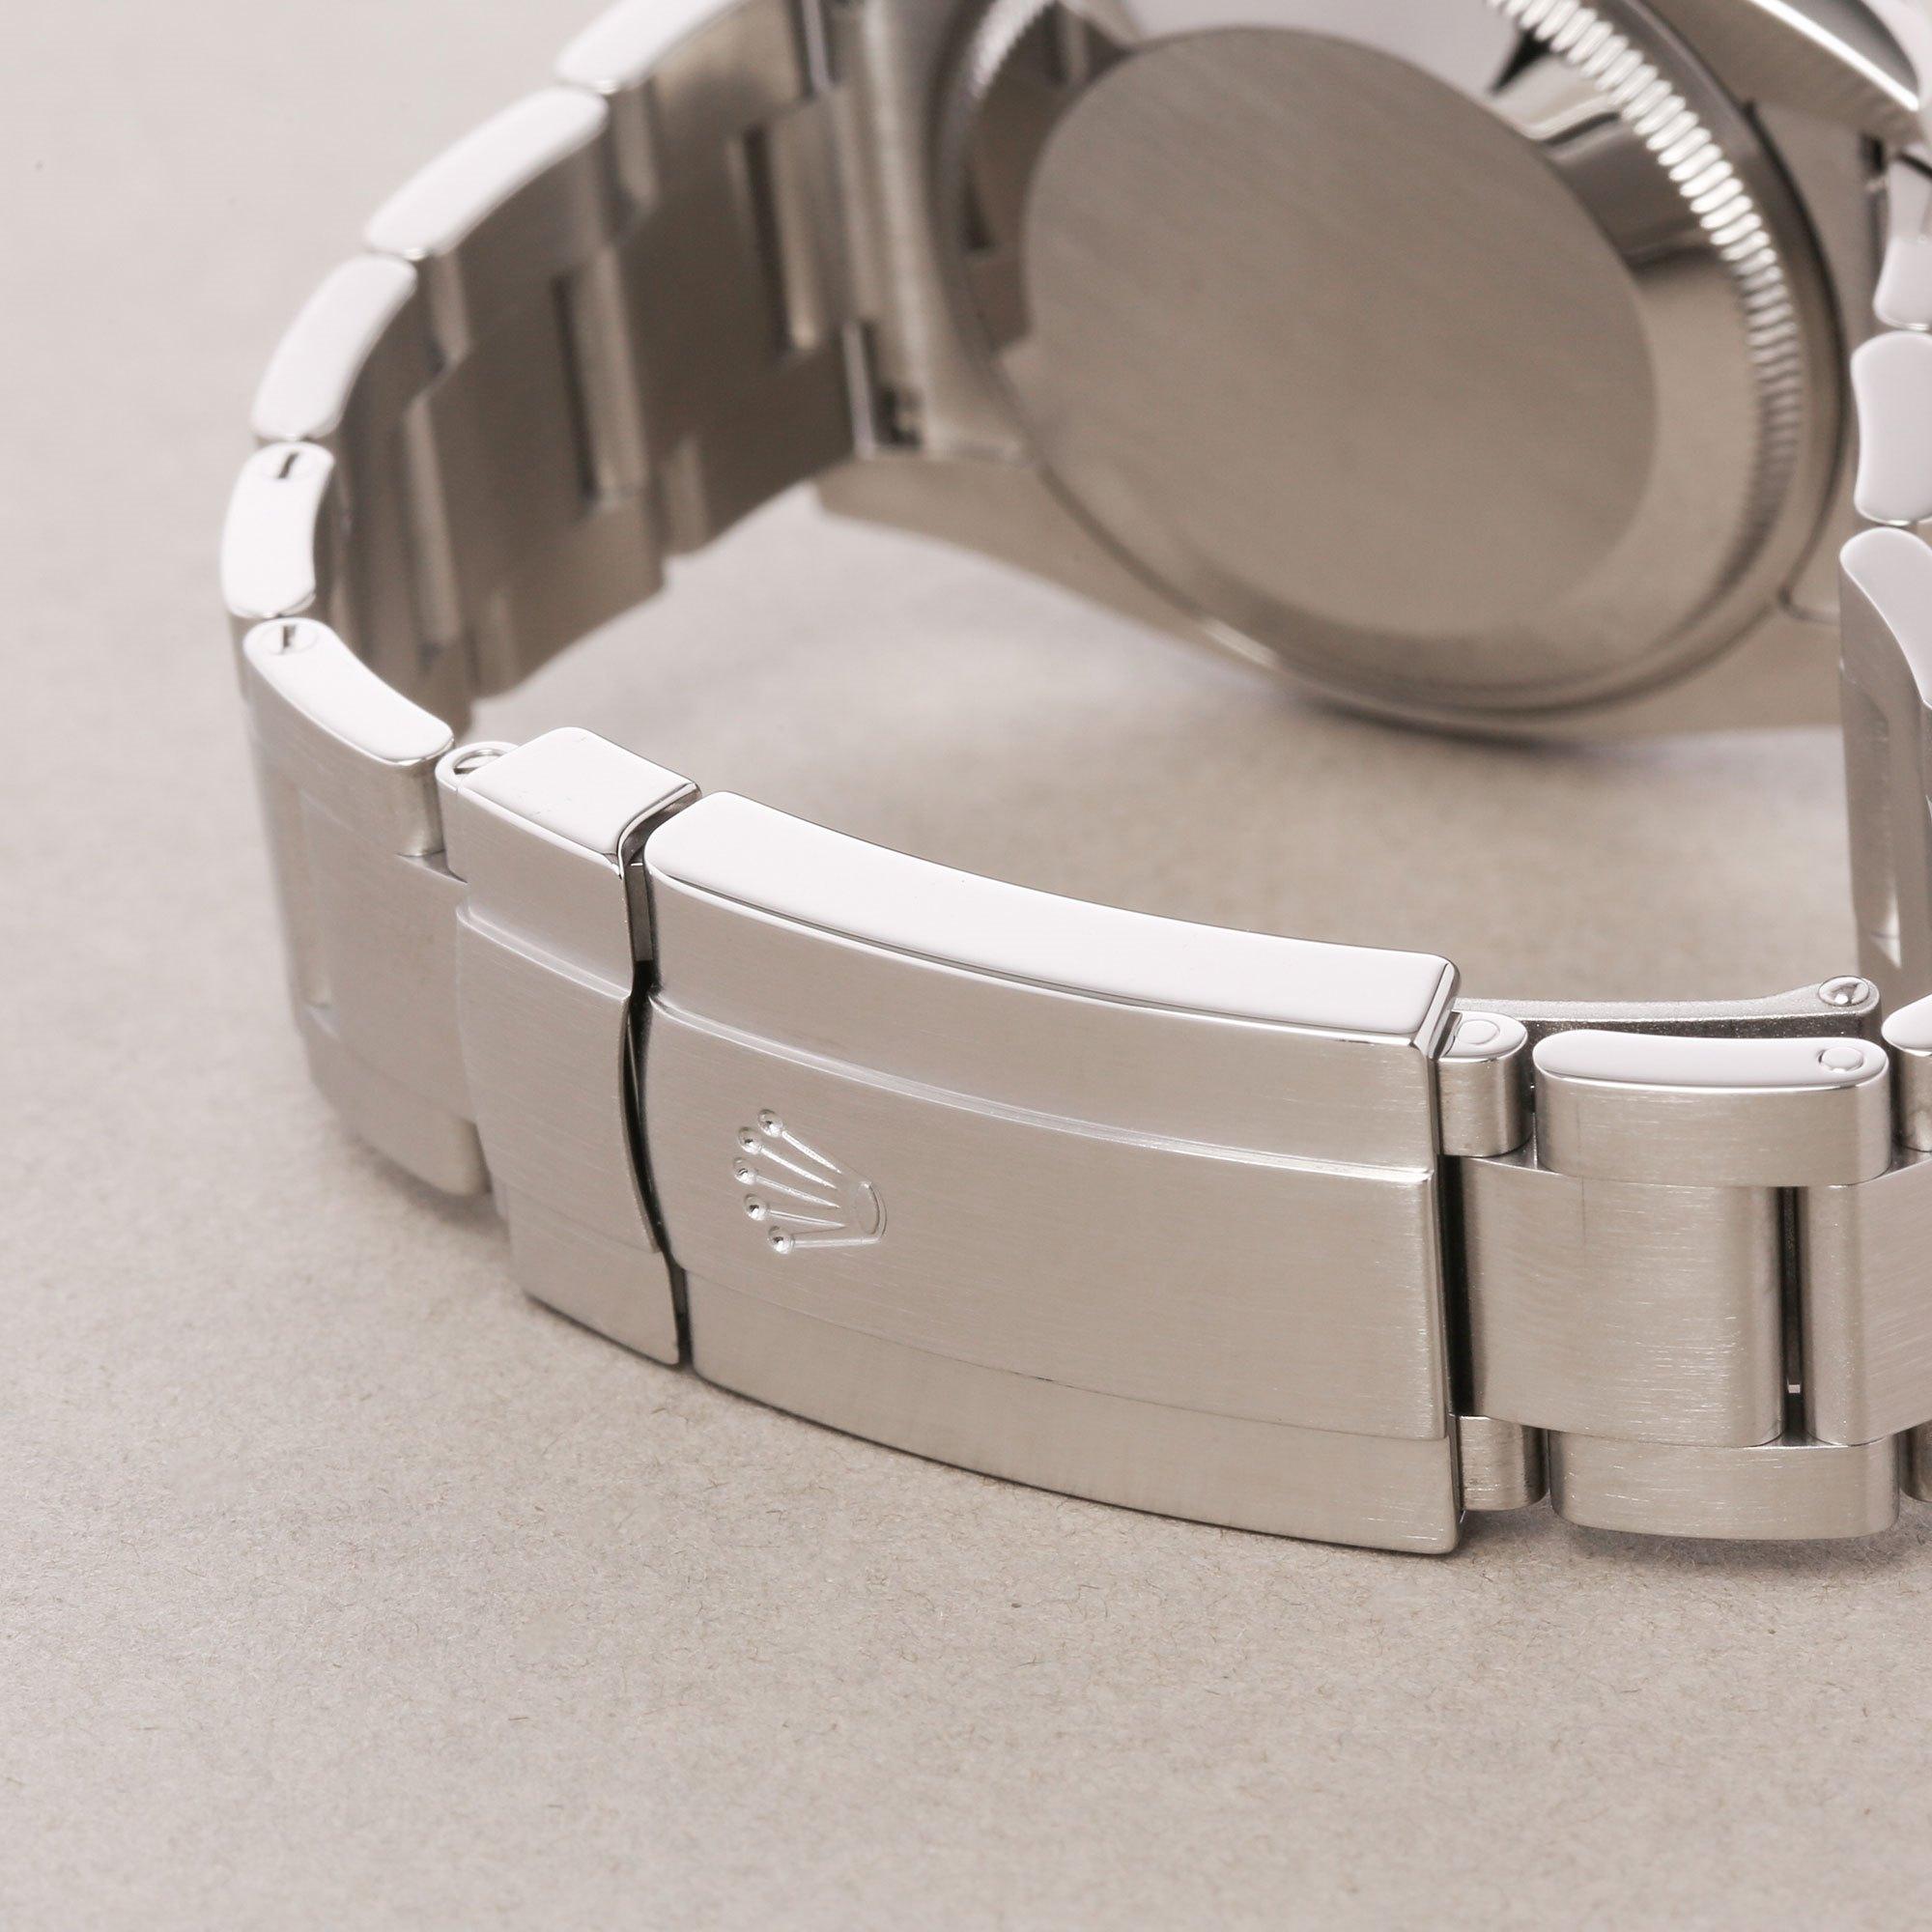 Rolex Air-King 35 114200 Unisex Stainless Steel Watch 2